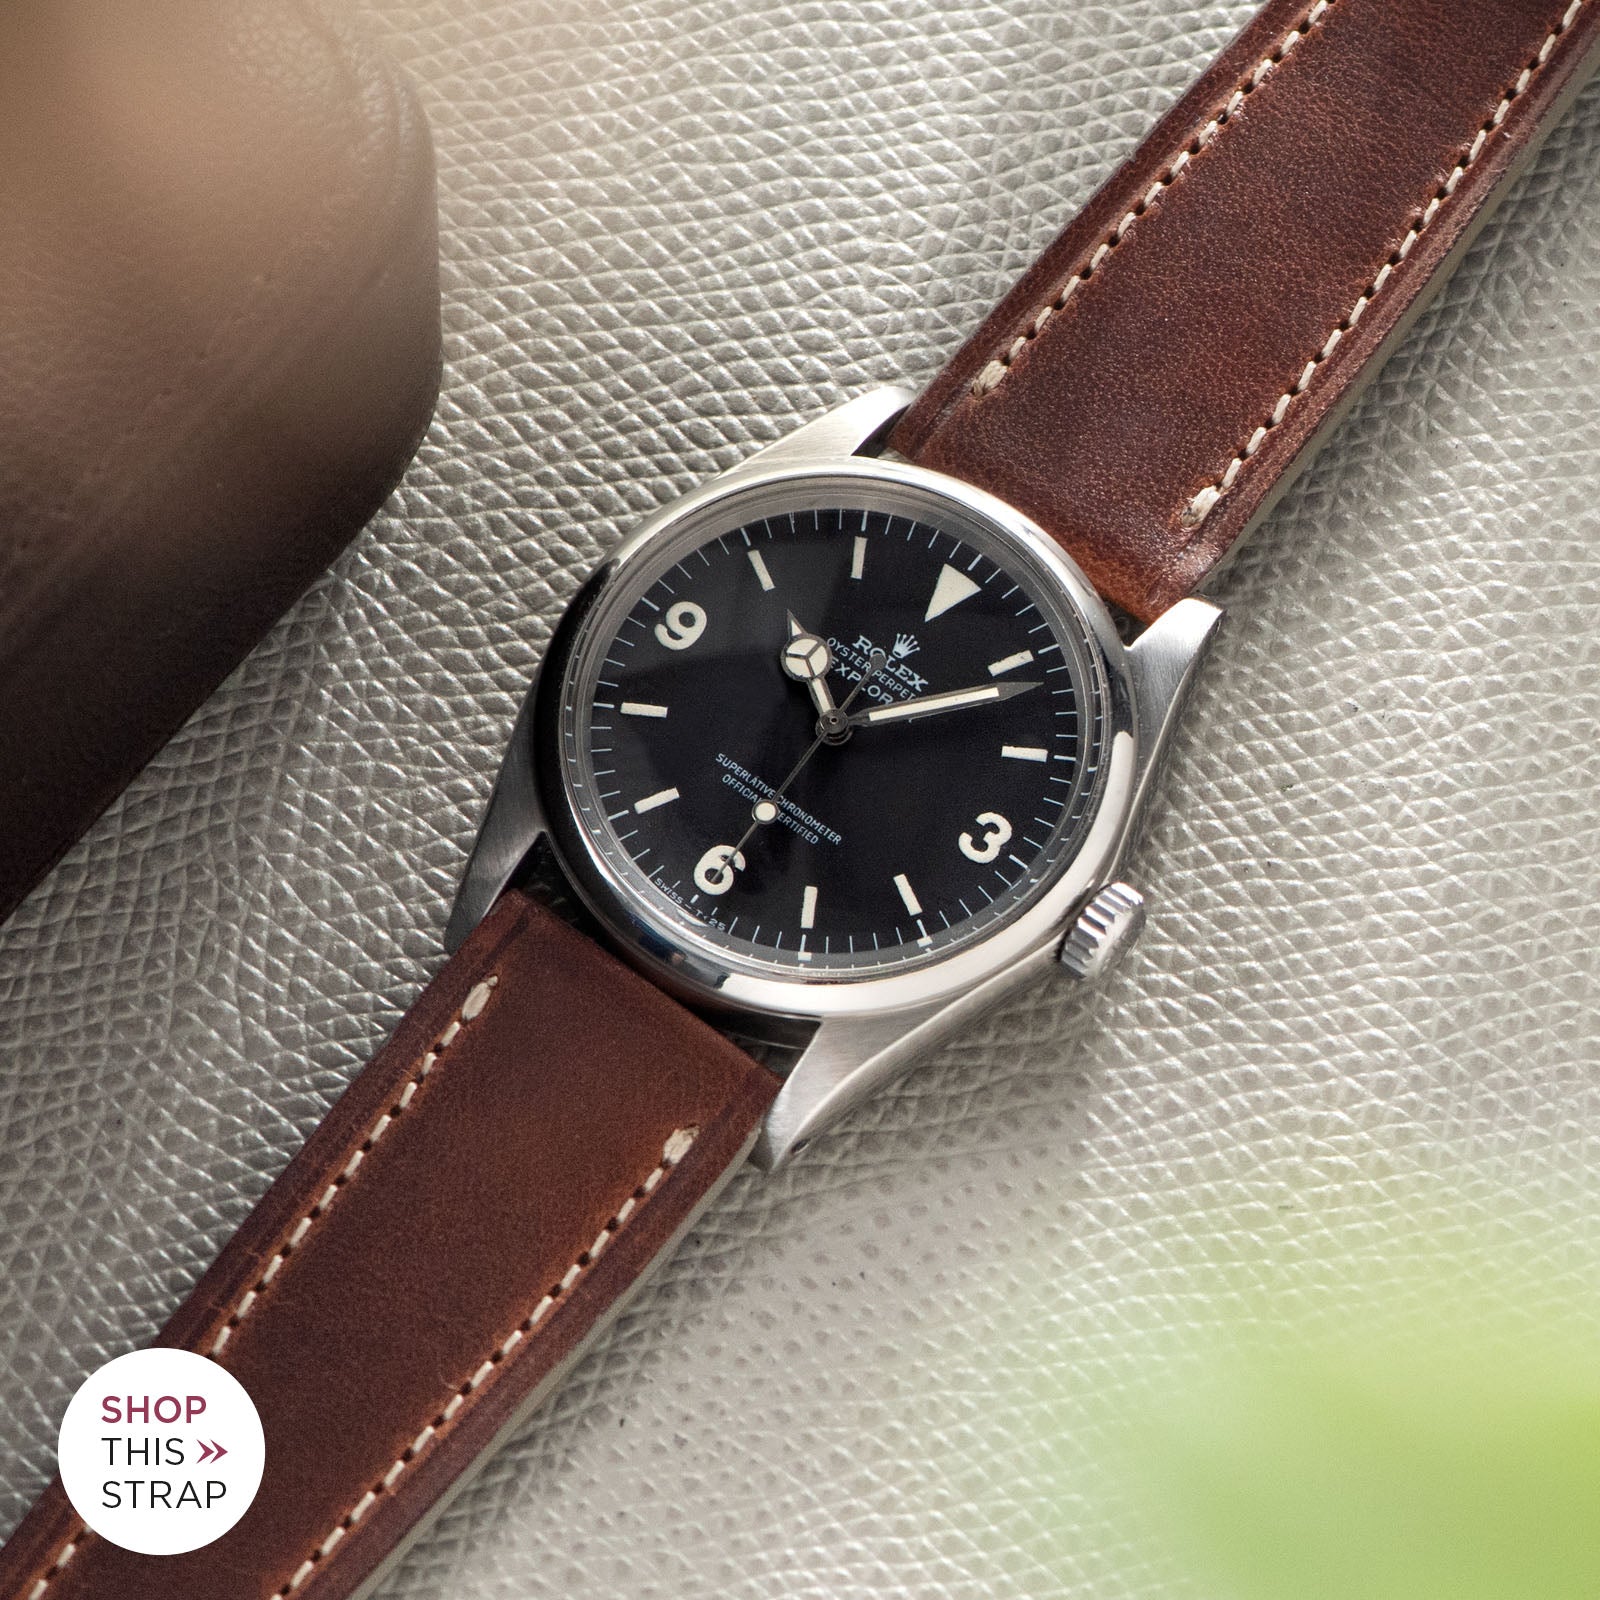 Bulang and Sons_Strap Guide_The Rolex 1016 Explorer_Le Métropolitain Brown Leather Watch Strap